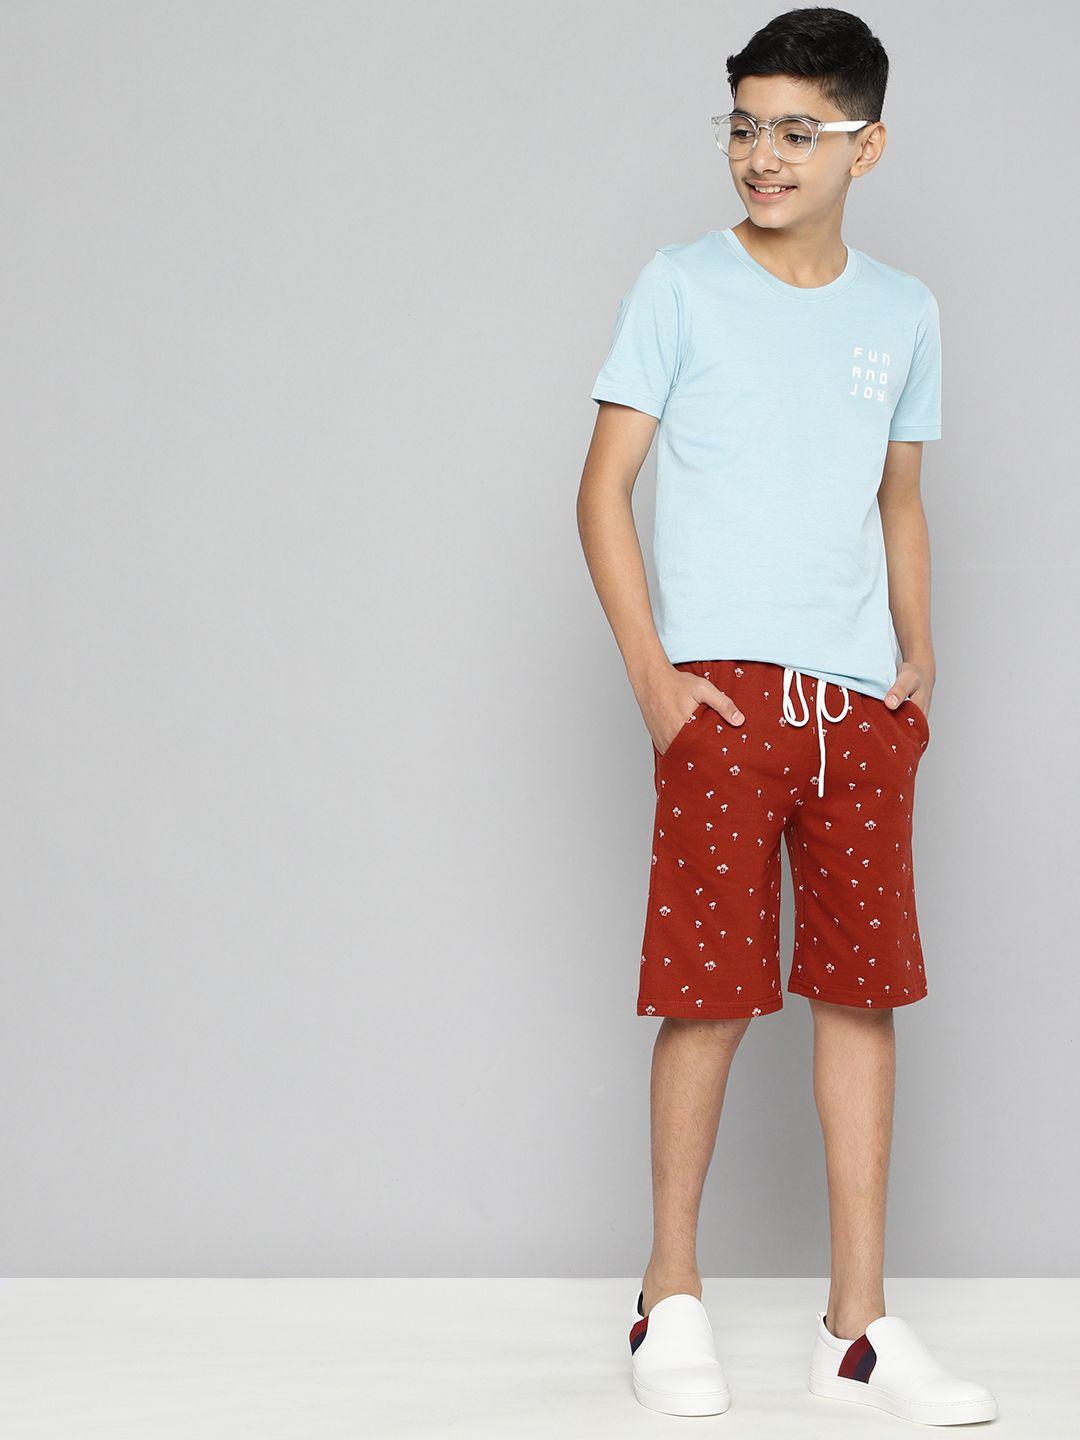 m&h-juniors-boys-brown-conversational-printed-shorts